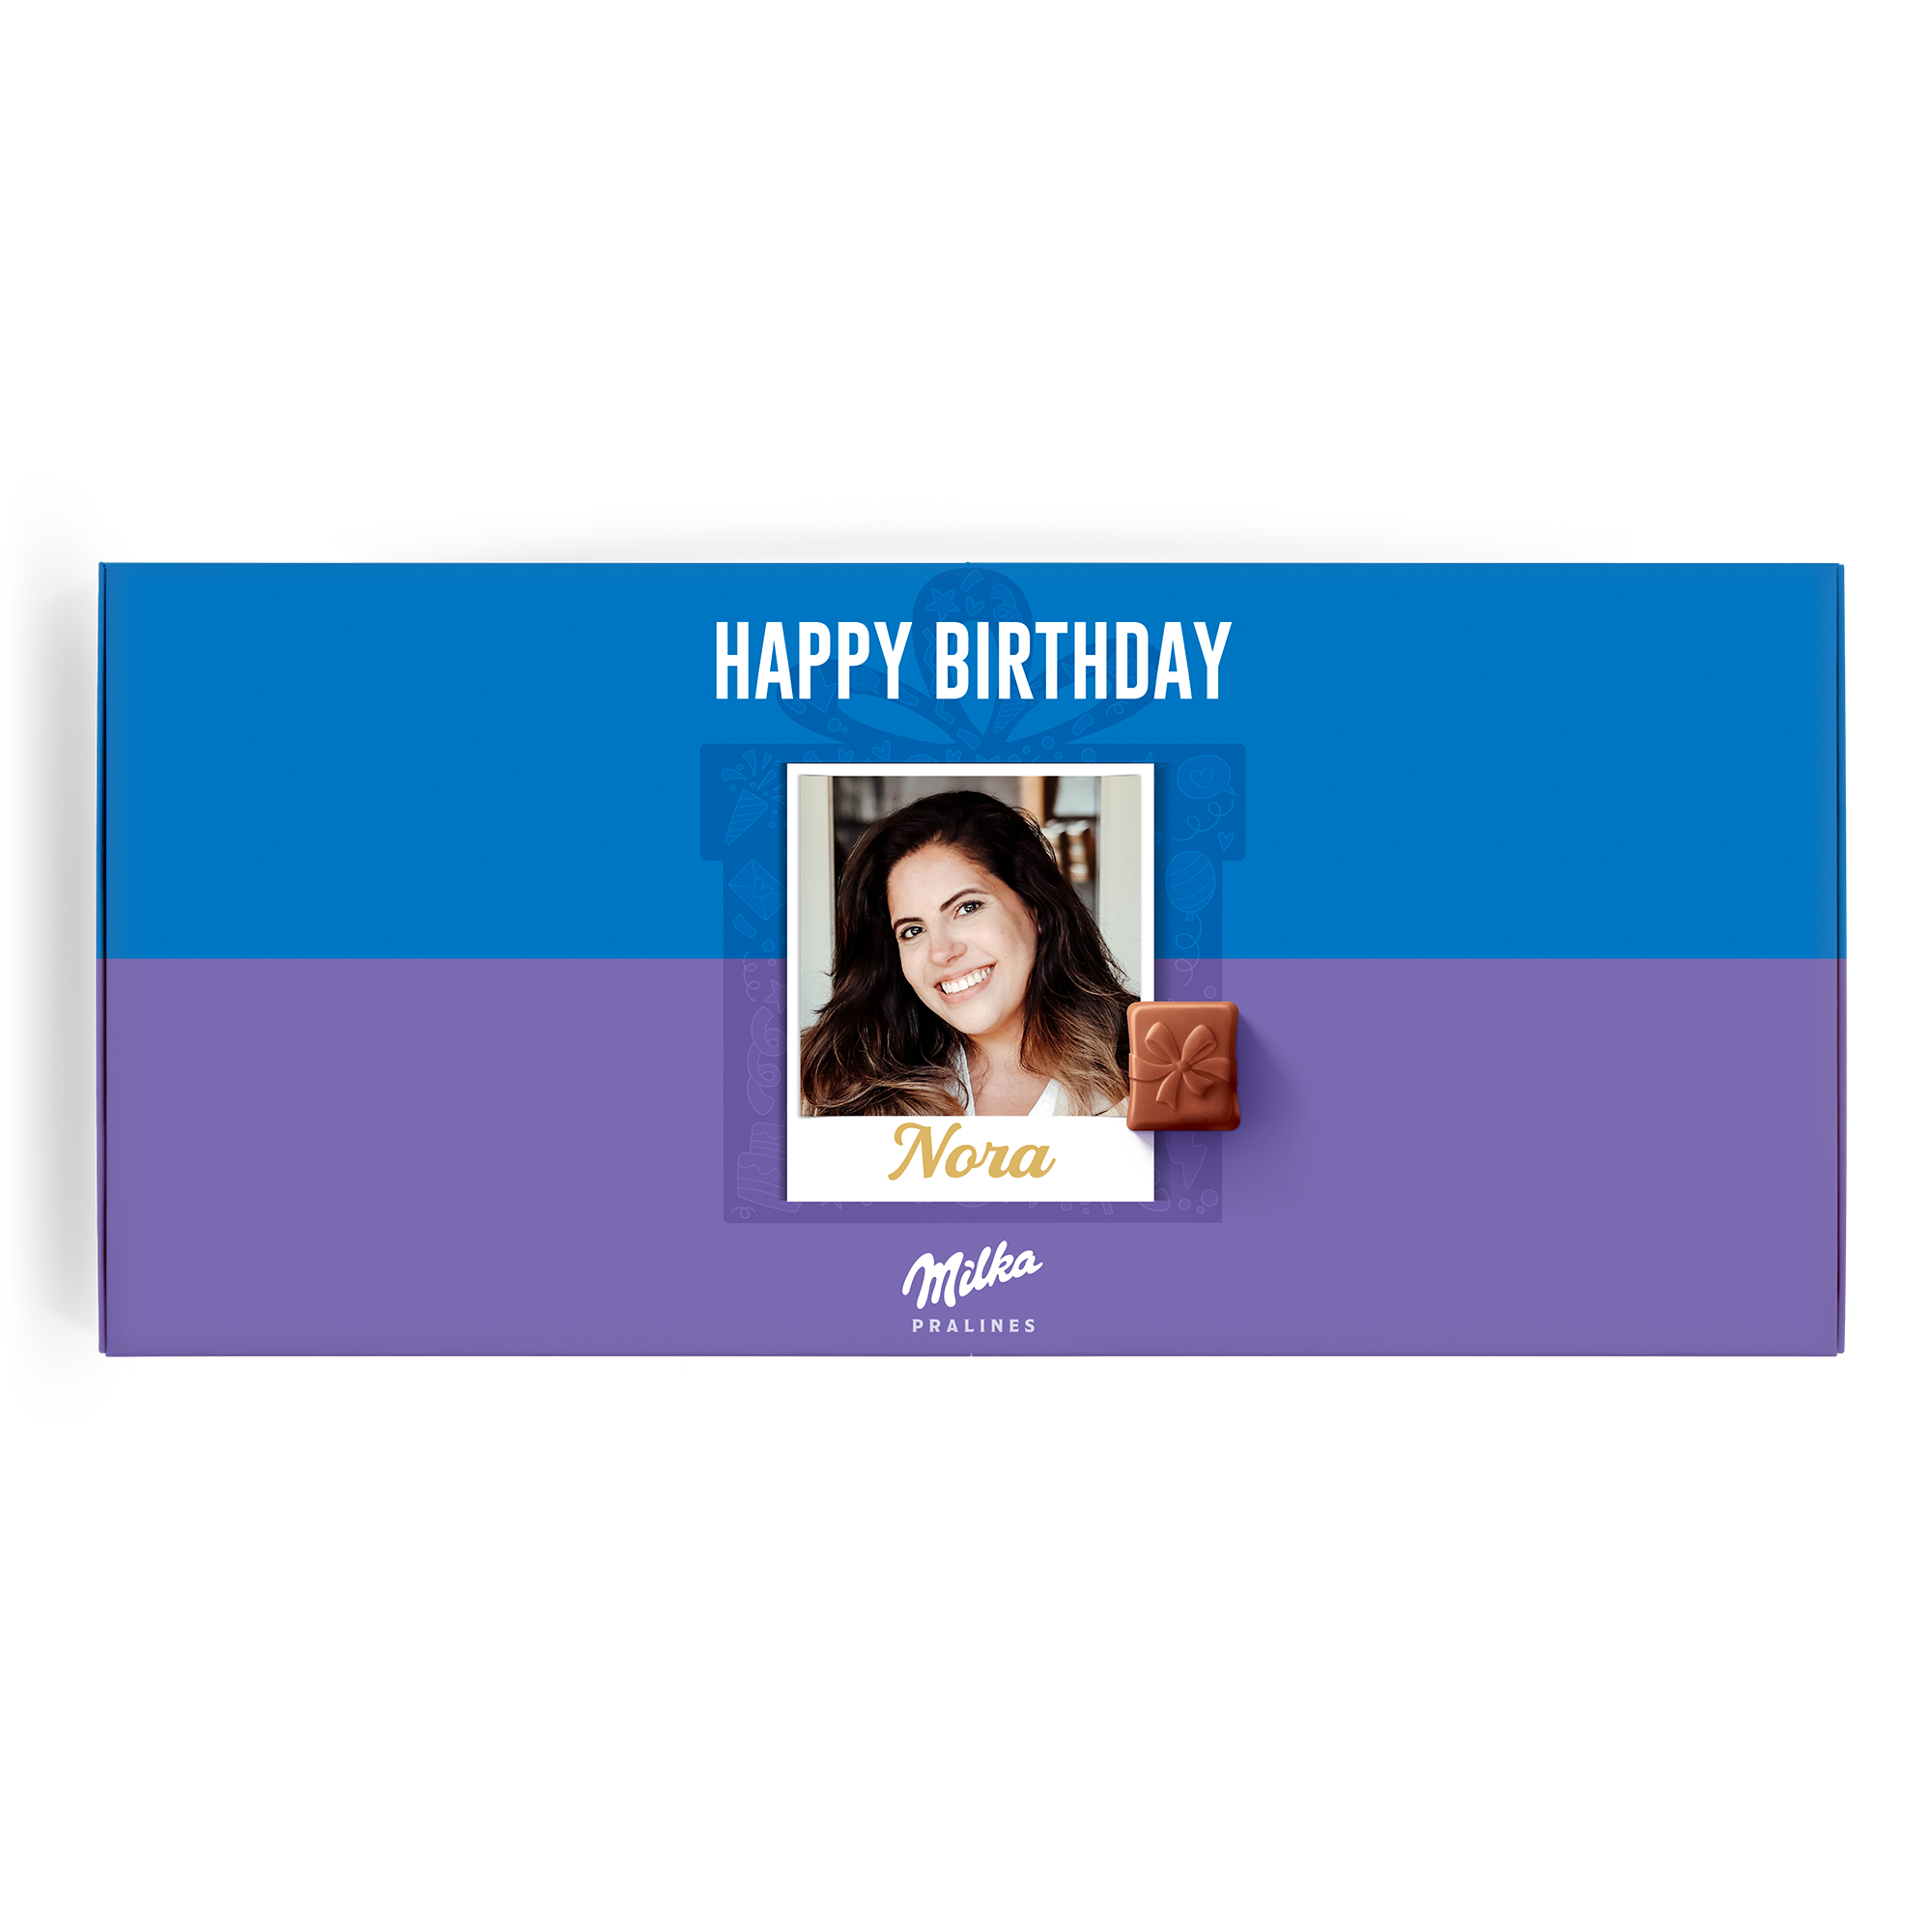 Personlig gaveeske med Happy Birthday-sjokolade fra Milka